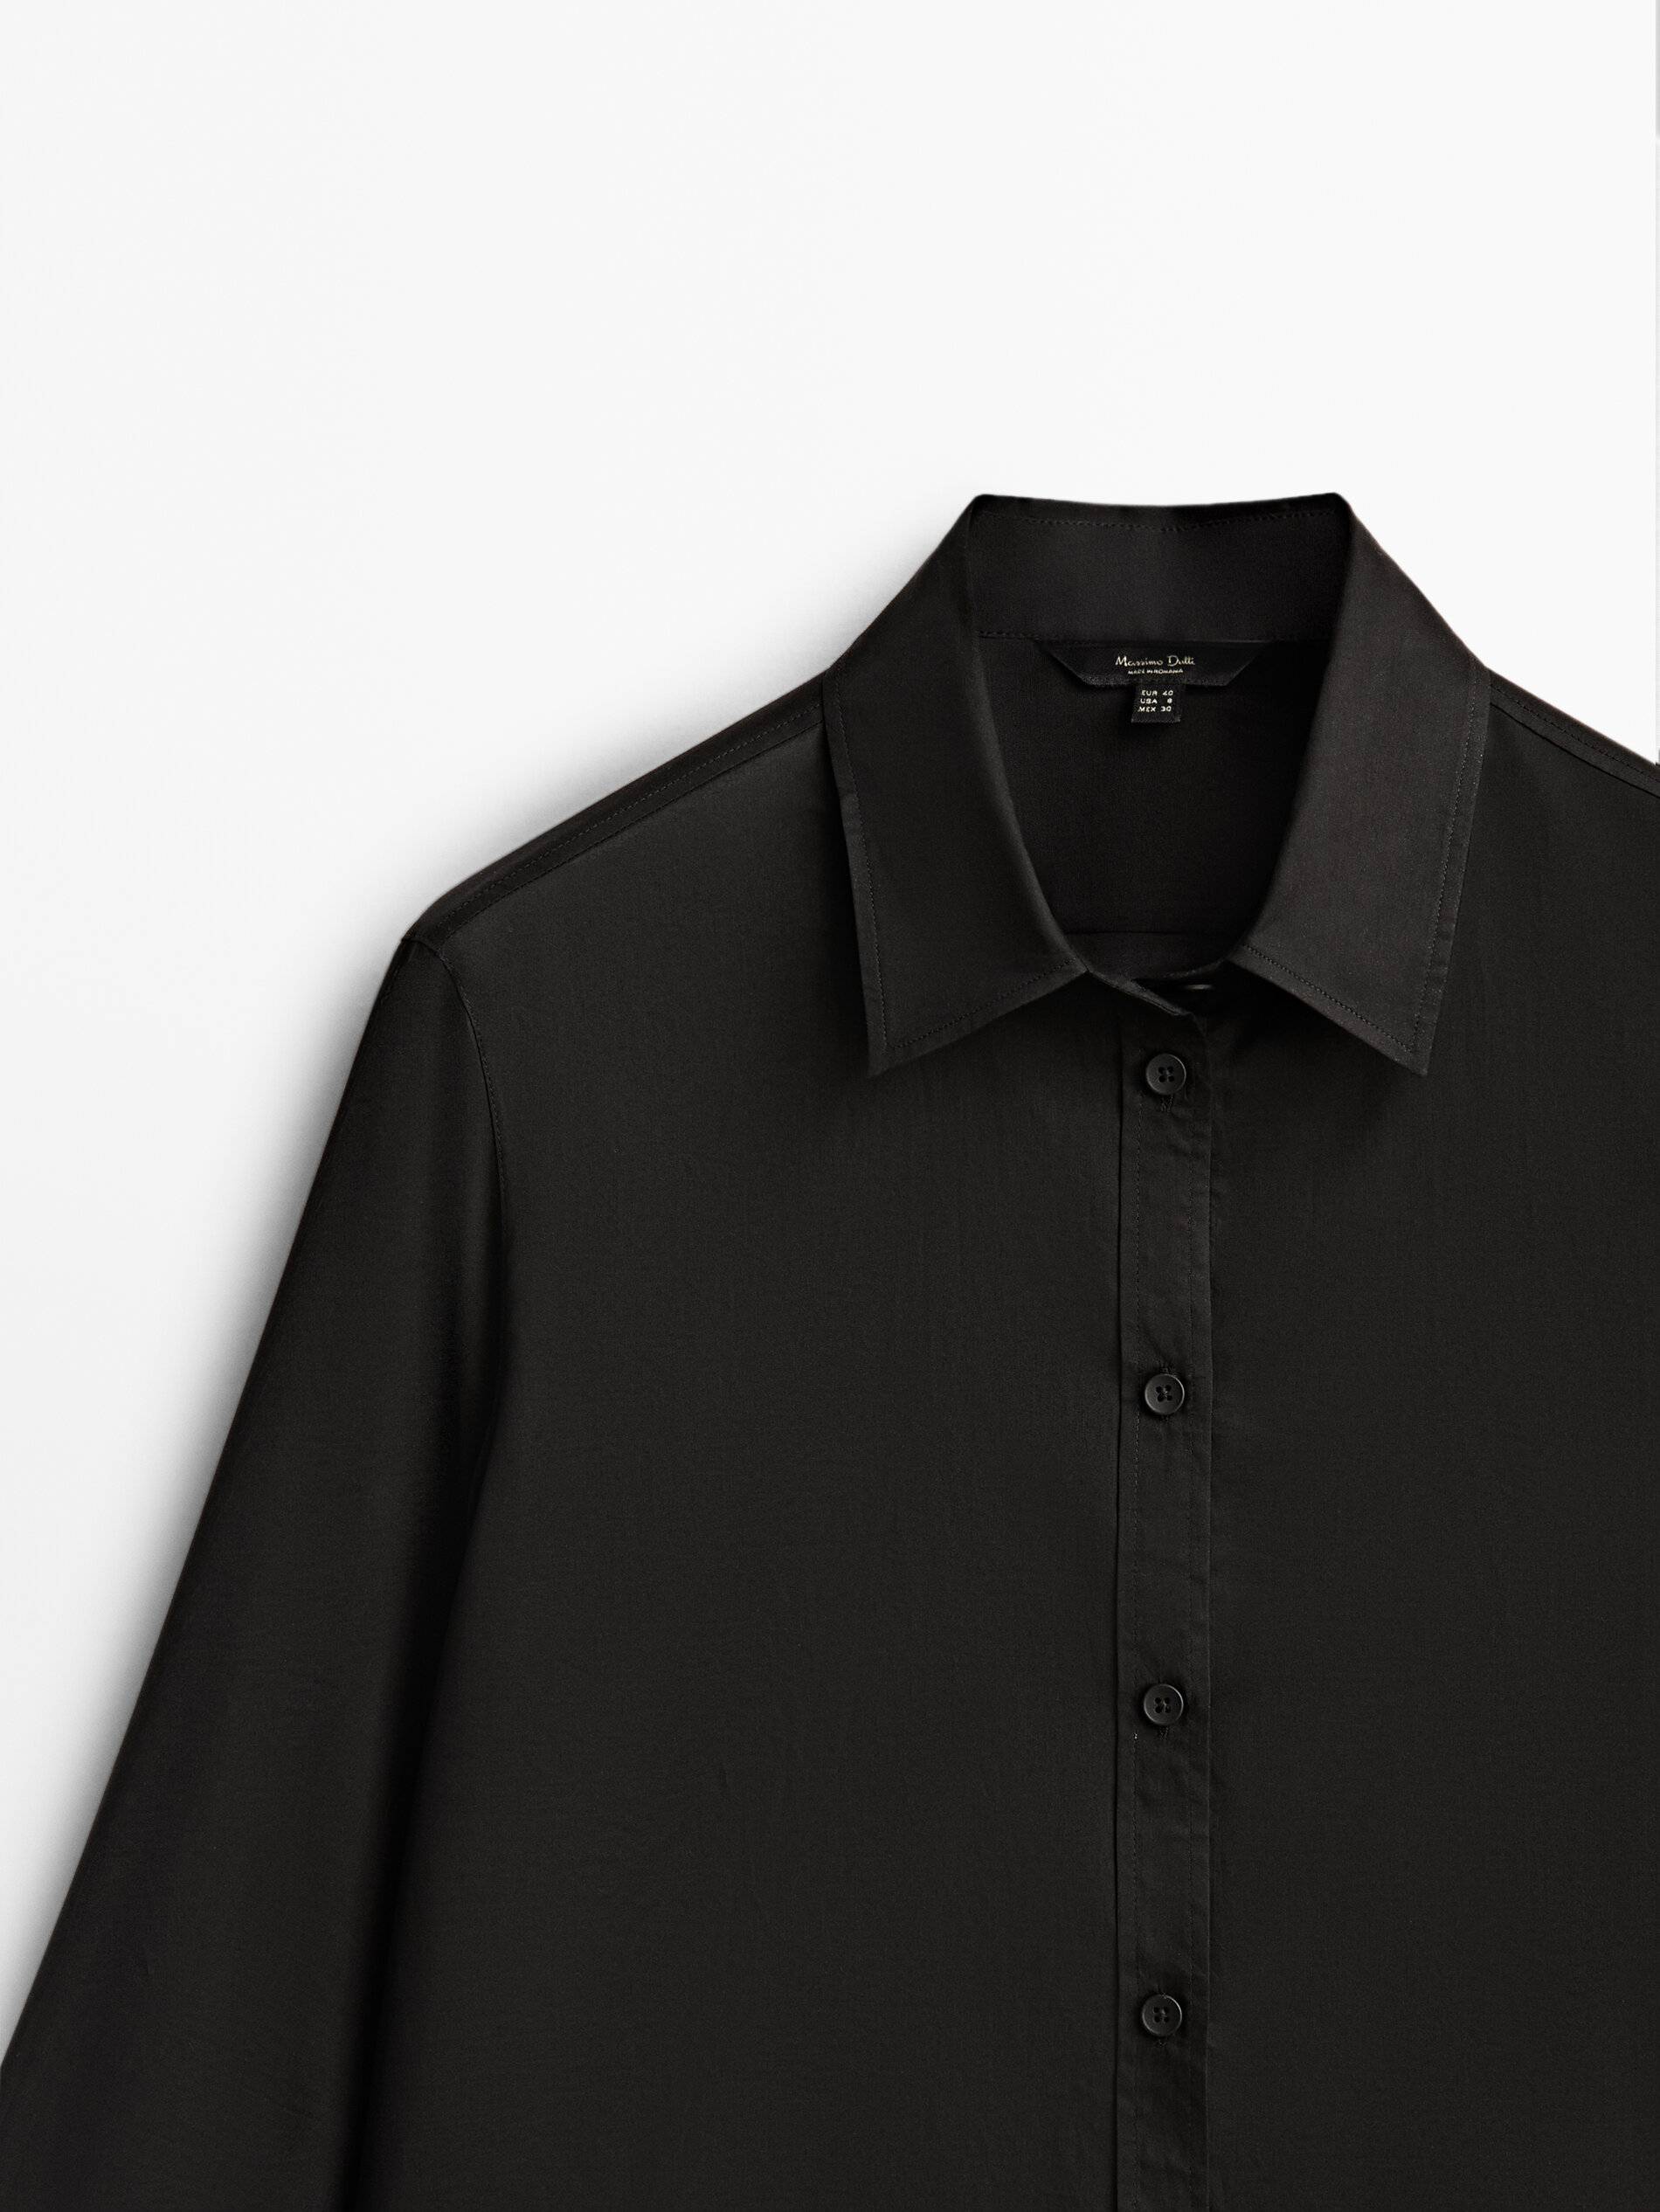 Massimo Dutti blouse WOMEN FASHION Shirts & T-shirts NO STYLE Beige L discount 79% 